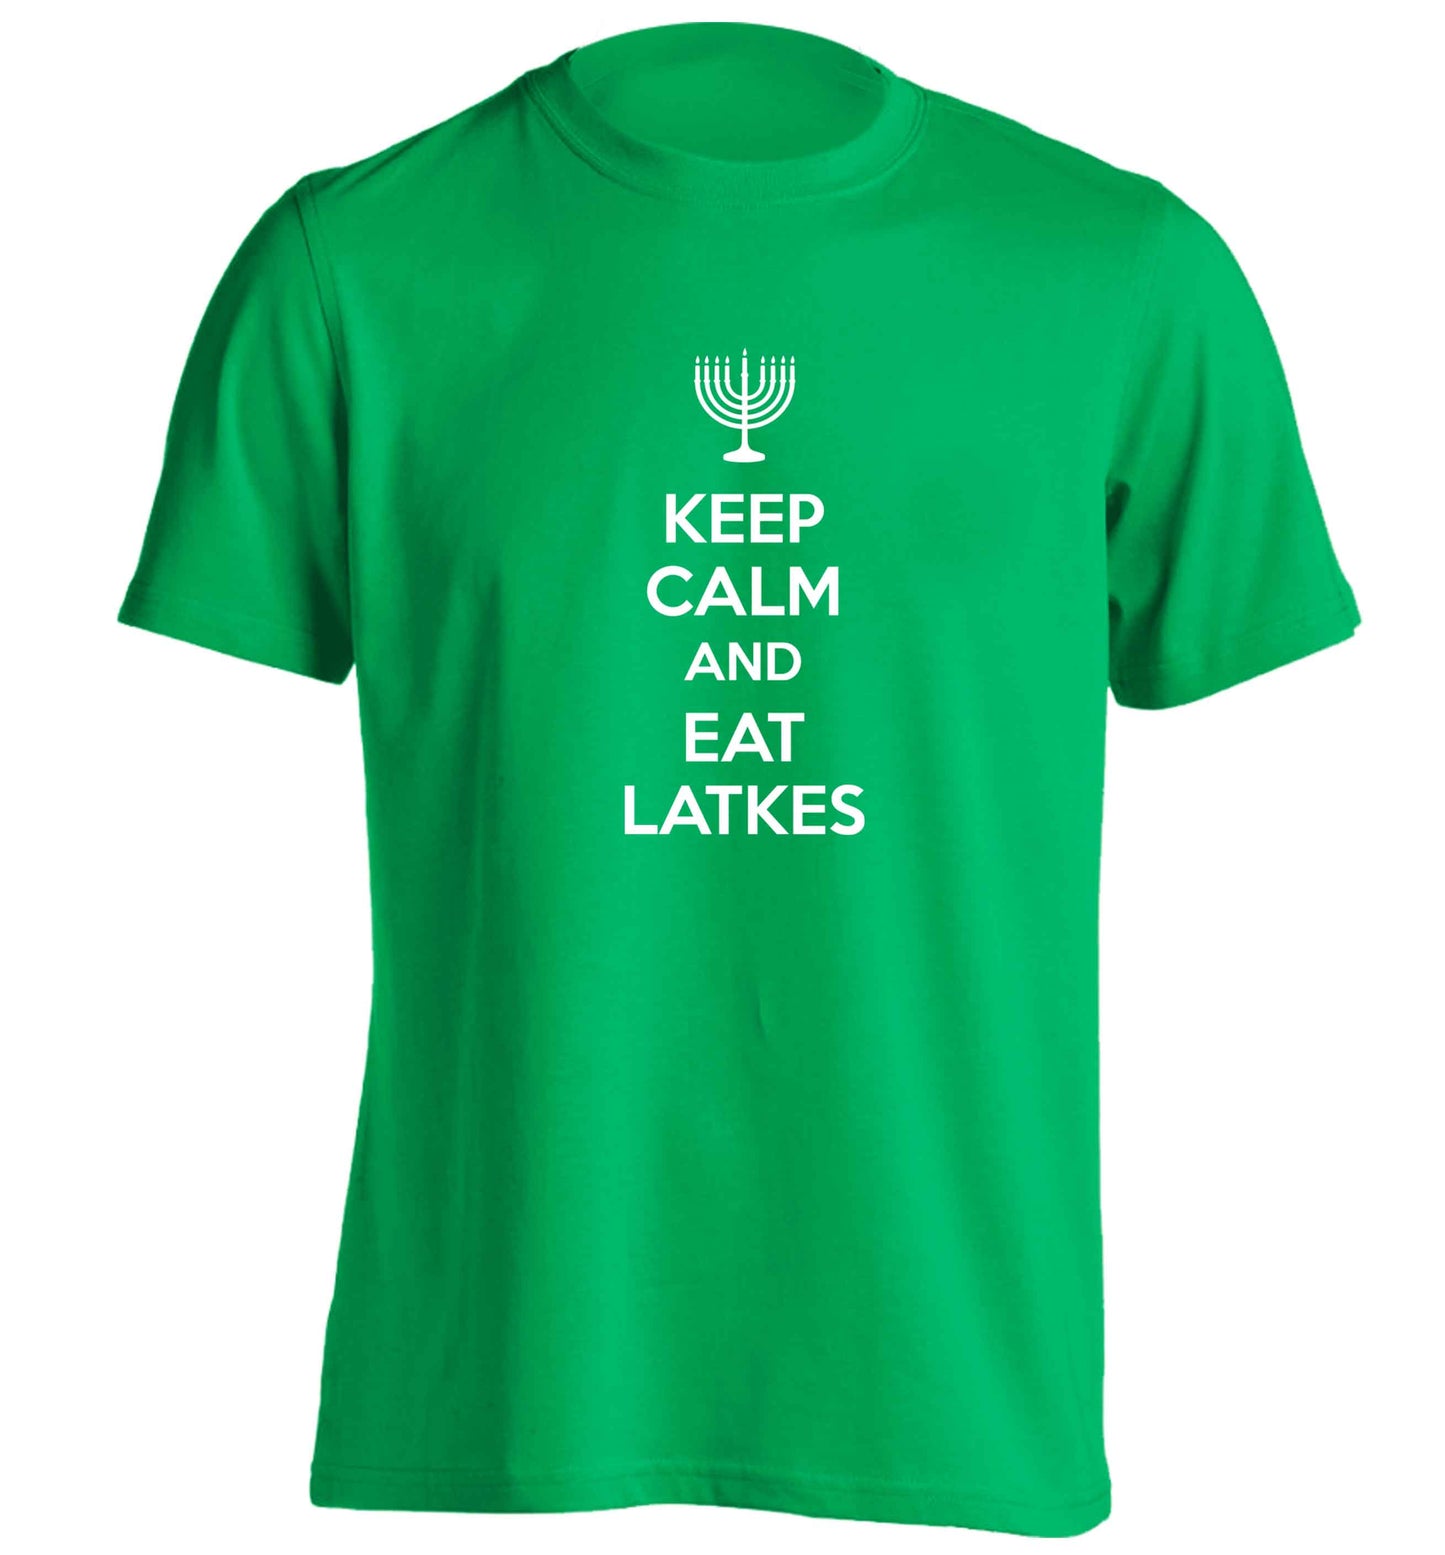 Keep calm and eat latkes adults unisex green Tshirt 2XL